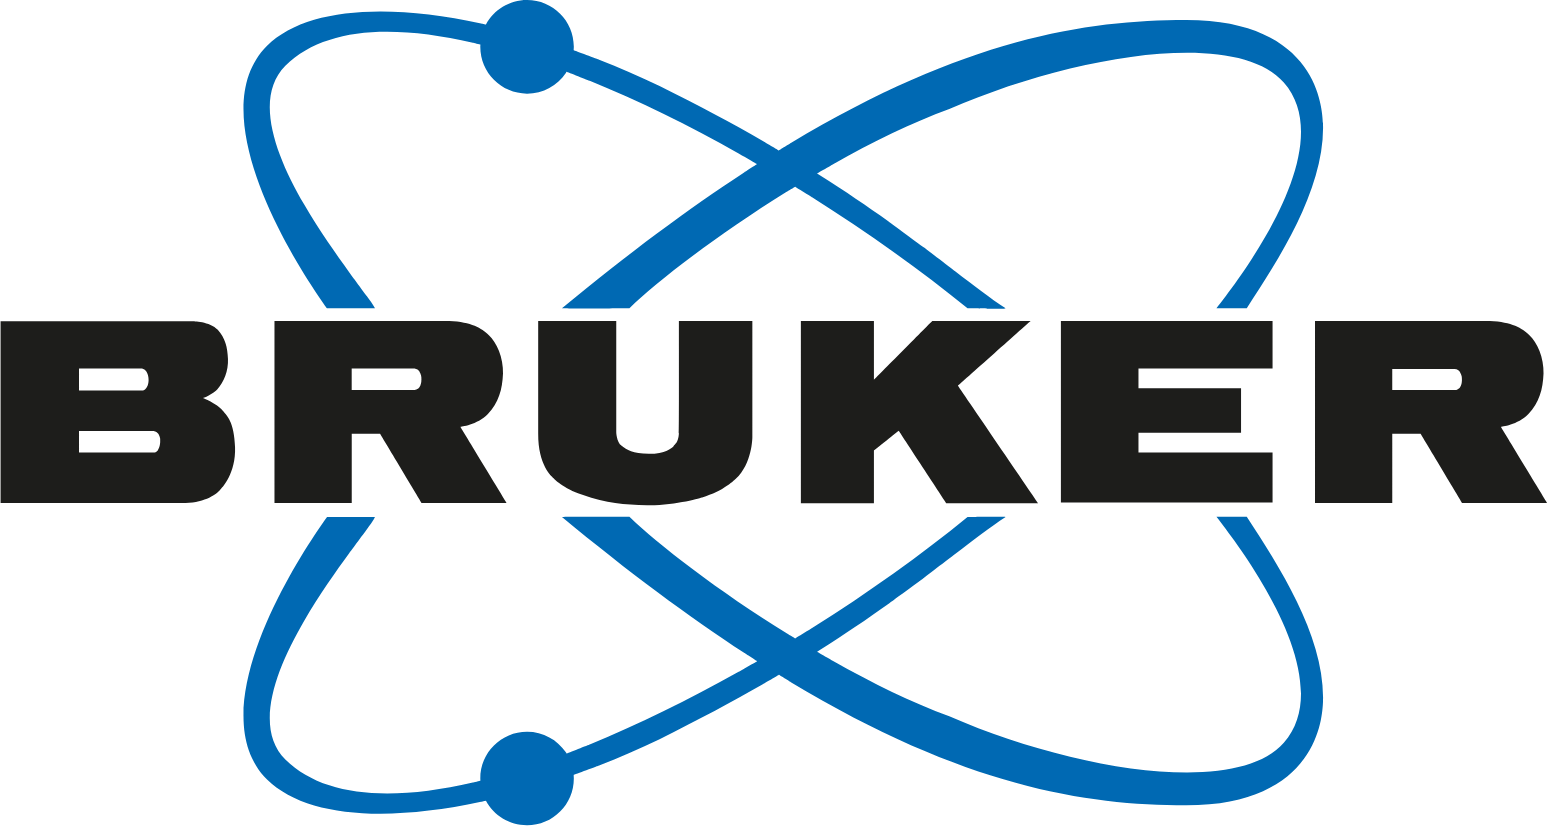 Bruker logo (transparent PNG)